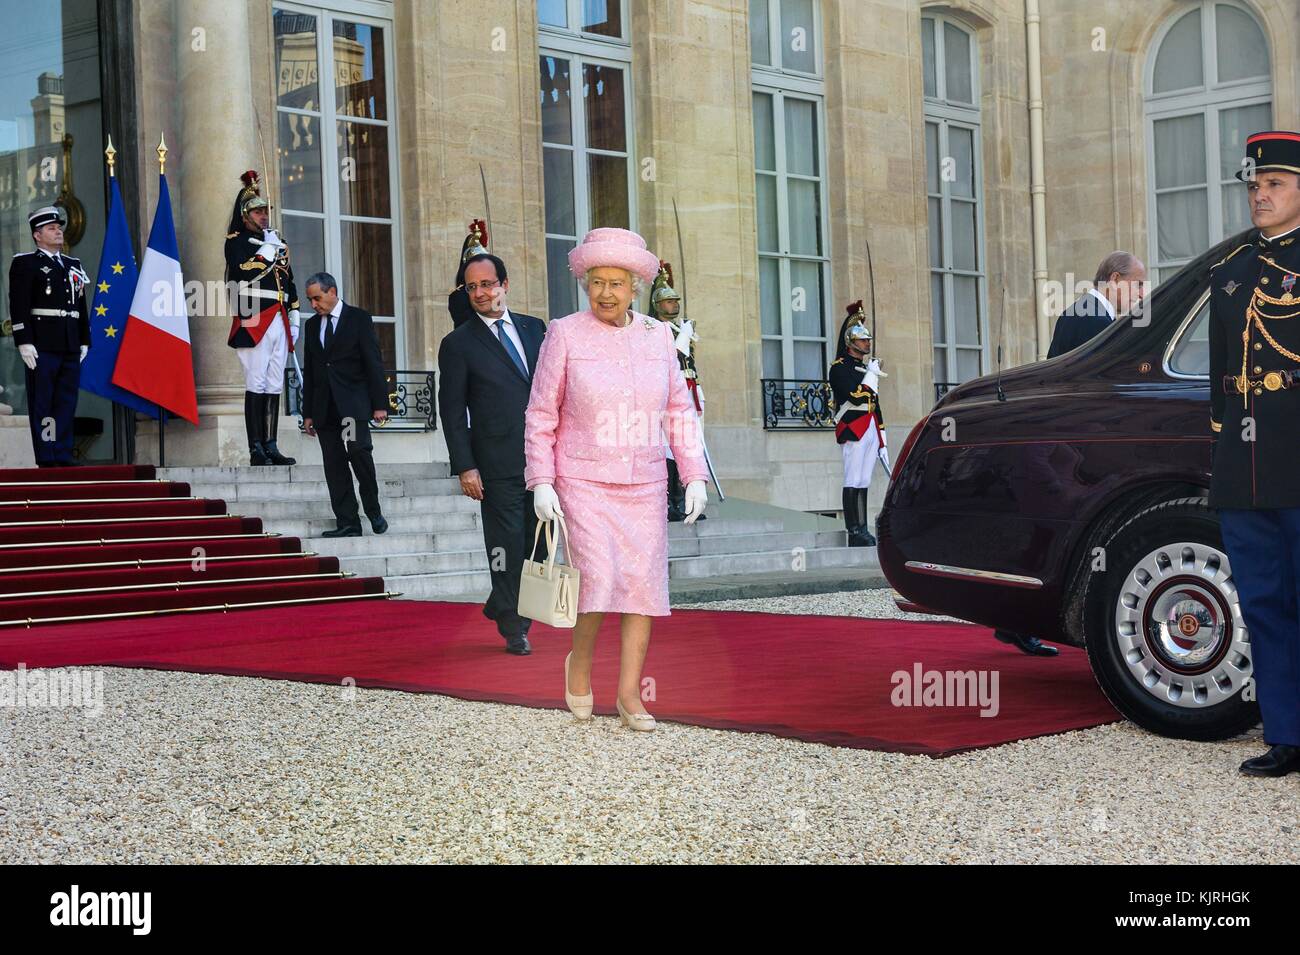 Paris, Frankreich - 2014: Datei Fotos - Francois Hollande, Königin Elizabeth II Personen: François Hollande, Königin Elizabeth II. Stockfoto